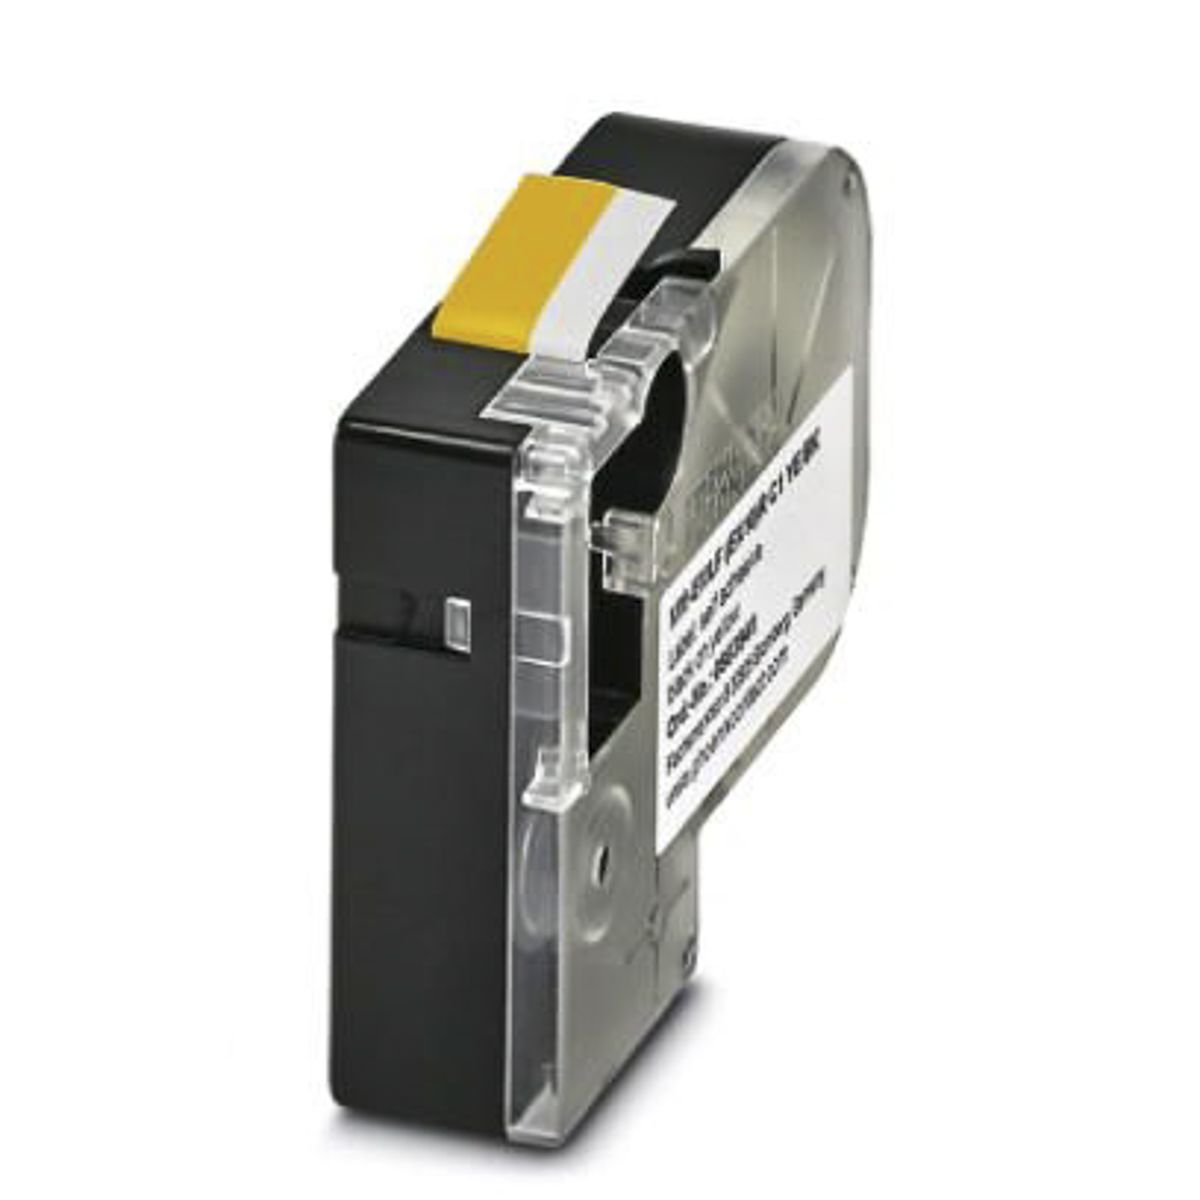 Phoenix Contact MM-EMLF (EX10)R C1 YE/BK Black on Yellow Label Printer Tape, 8 m Length, 10 mm Width, 8m Label Length,